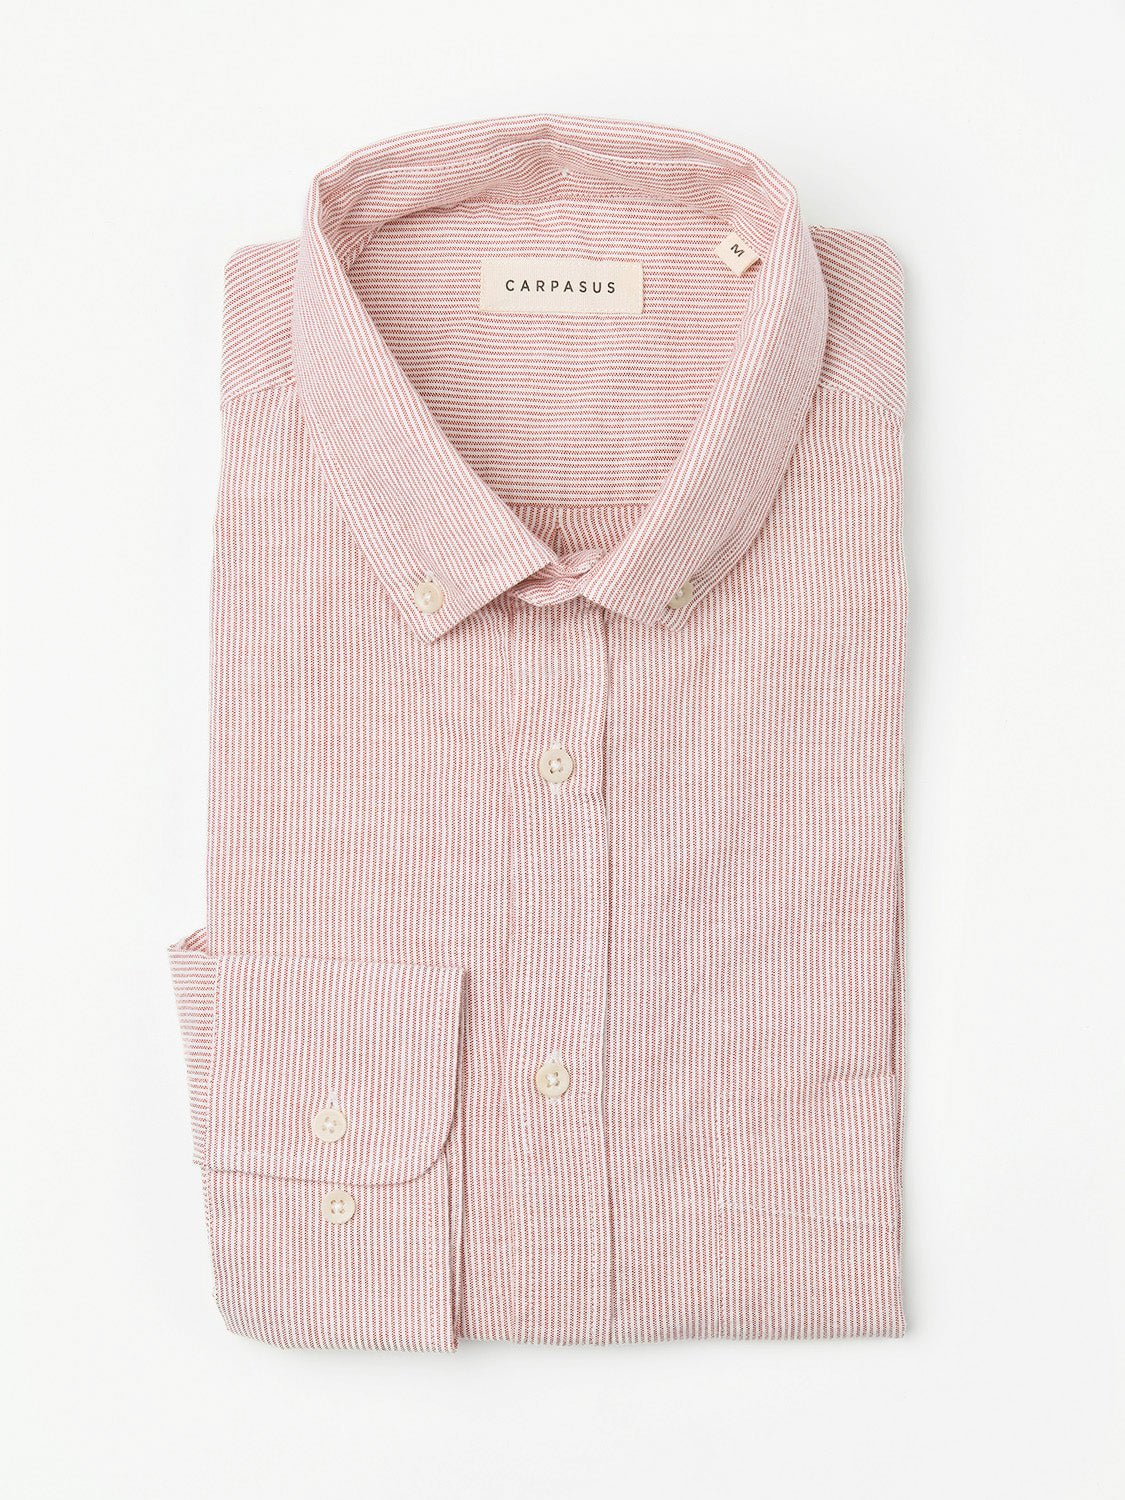 carpasus sustainable organic cotton shirt bernina stripes rust. Nachhaltiges Carpasus Hemd Bernina Streifen Rust aus Bio Baumwolle 